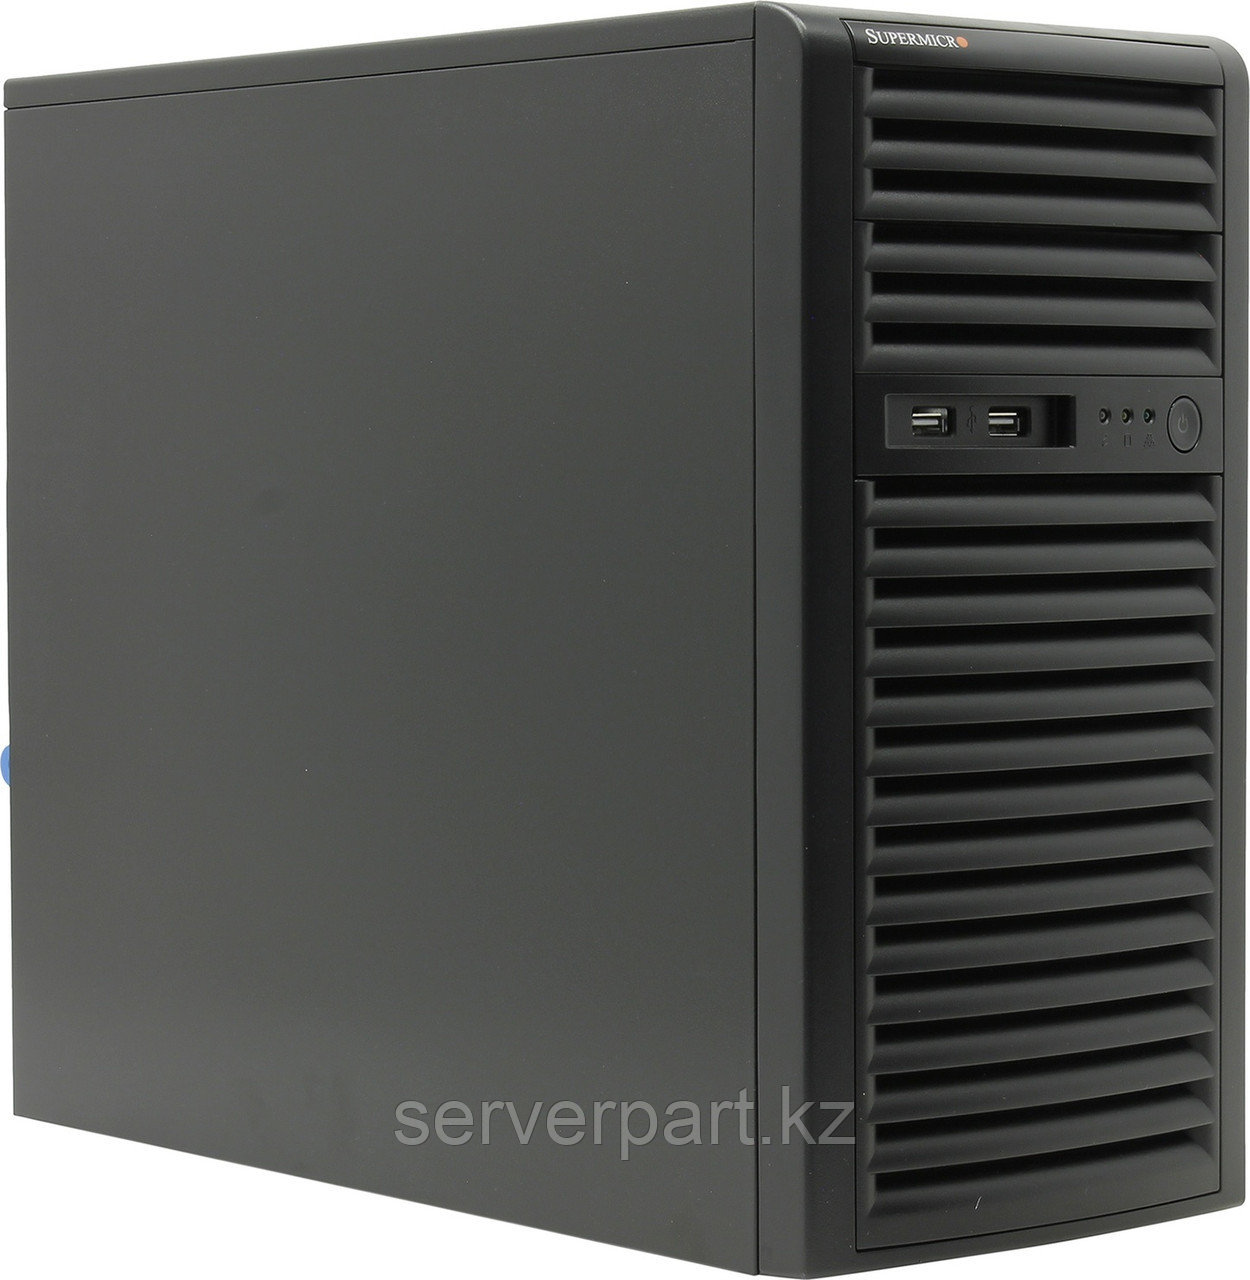 Сервер Supermicro SYS-5039C Tower 4LFF/4-core intel xeon E2124 3.3GHz/48GB EUDIMM/1x480GB SSD DT Hyb